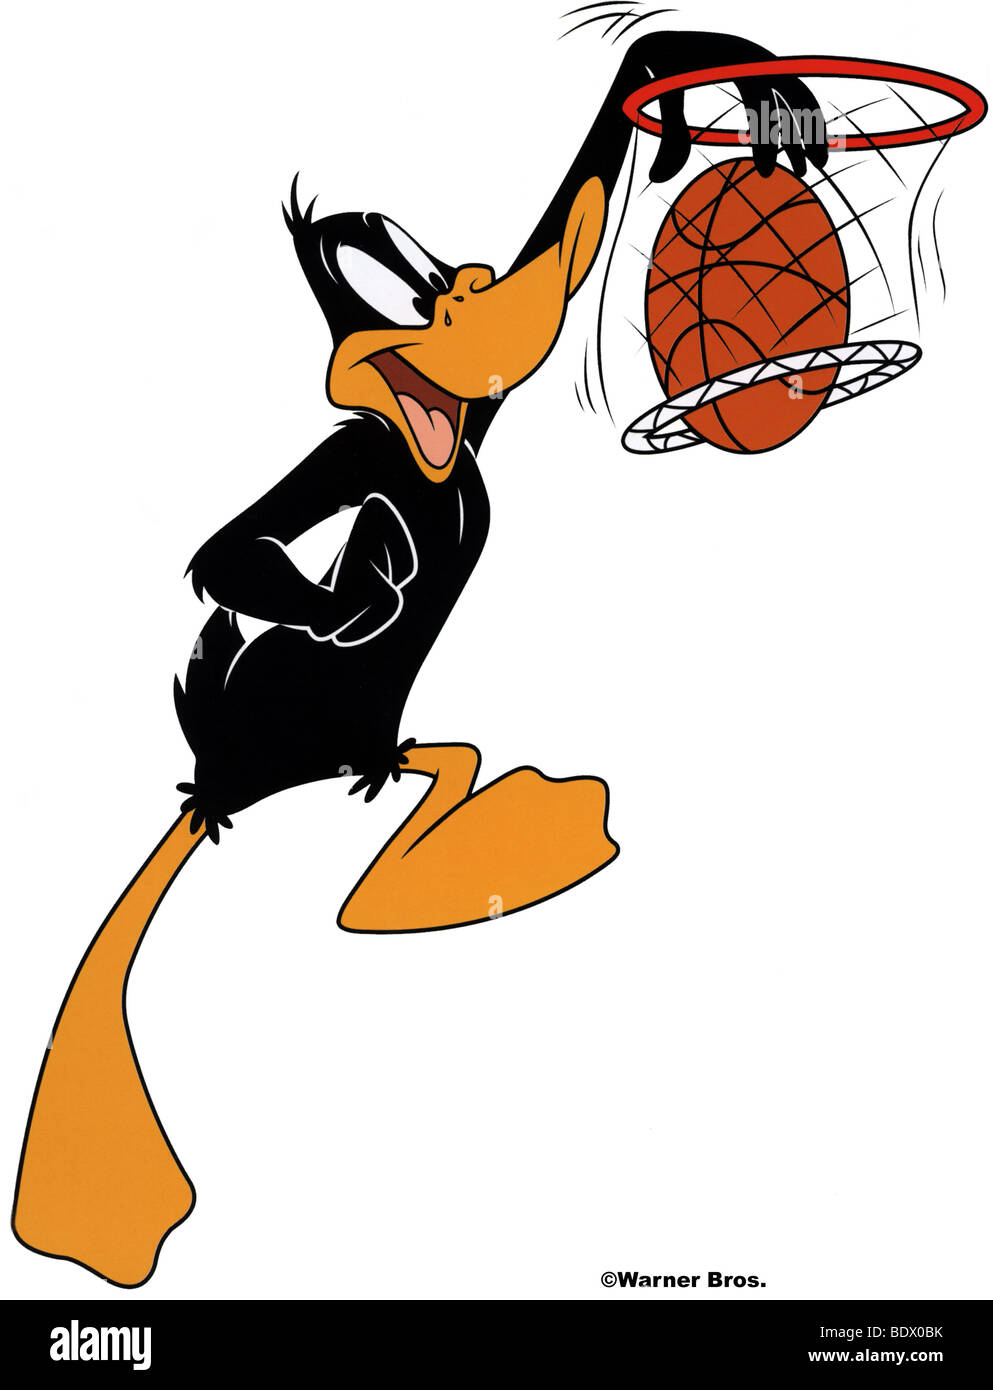 DAFFY DUCK - Warner Bros cartoon character in the Looney Tunes series Stock Photo